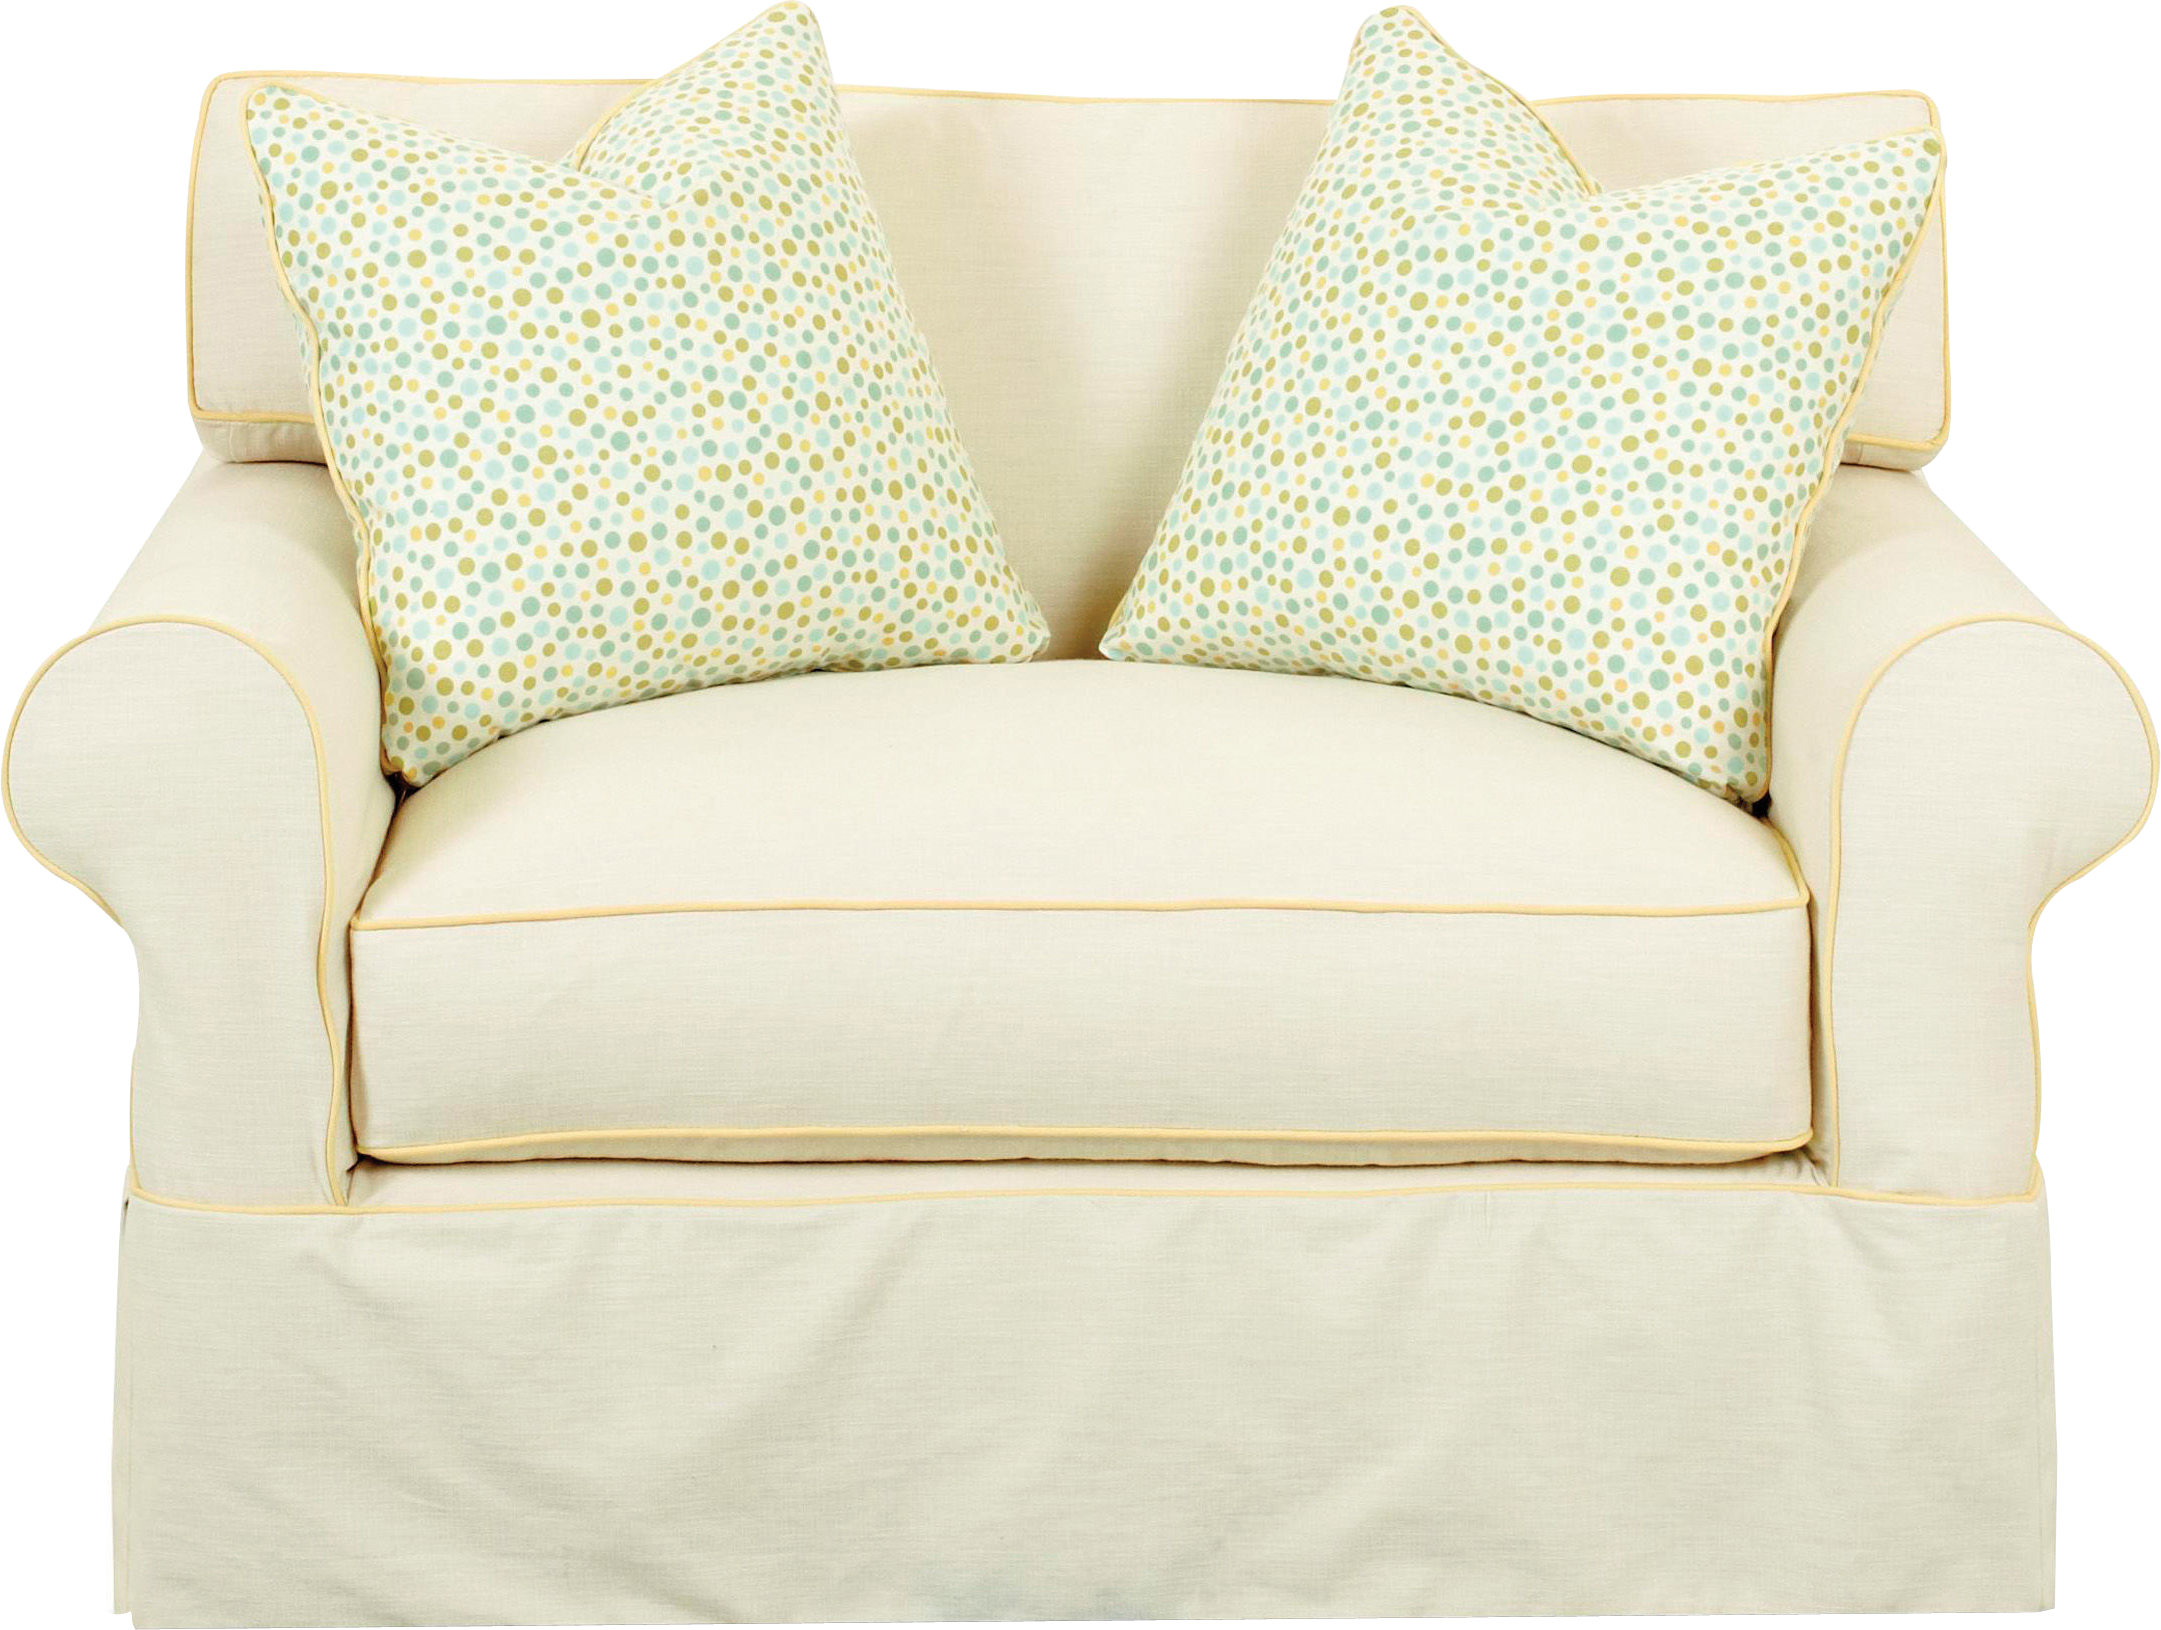 Ghế sofa trắng